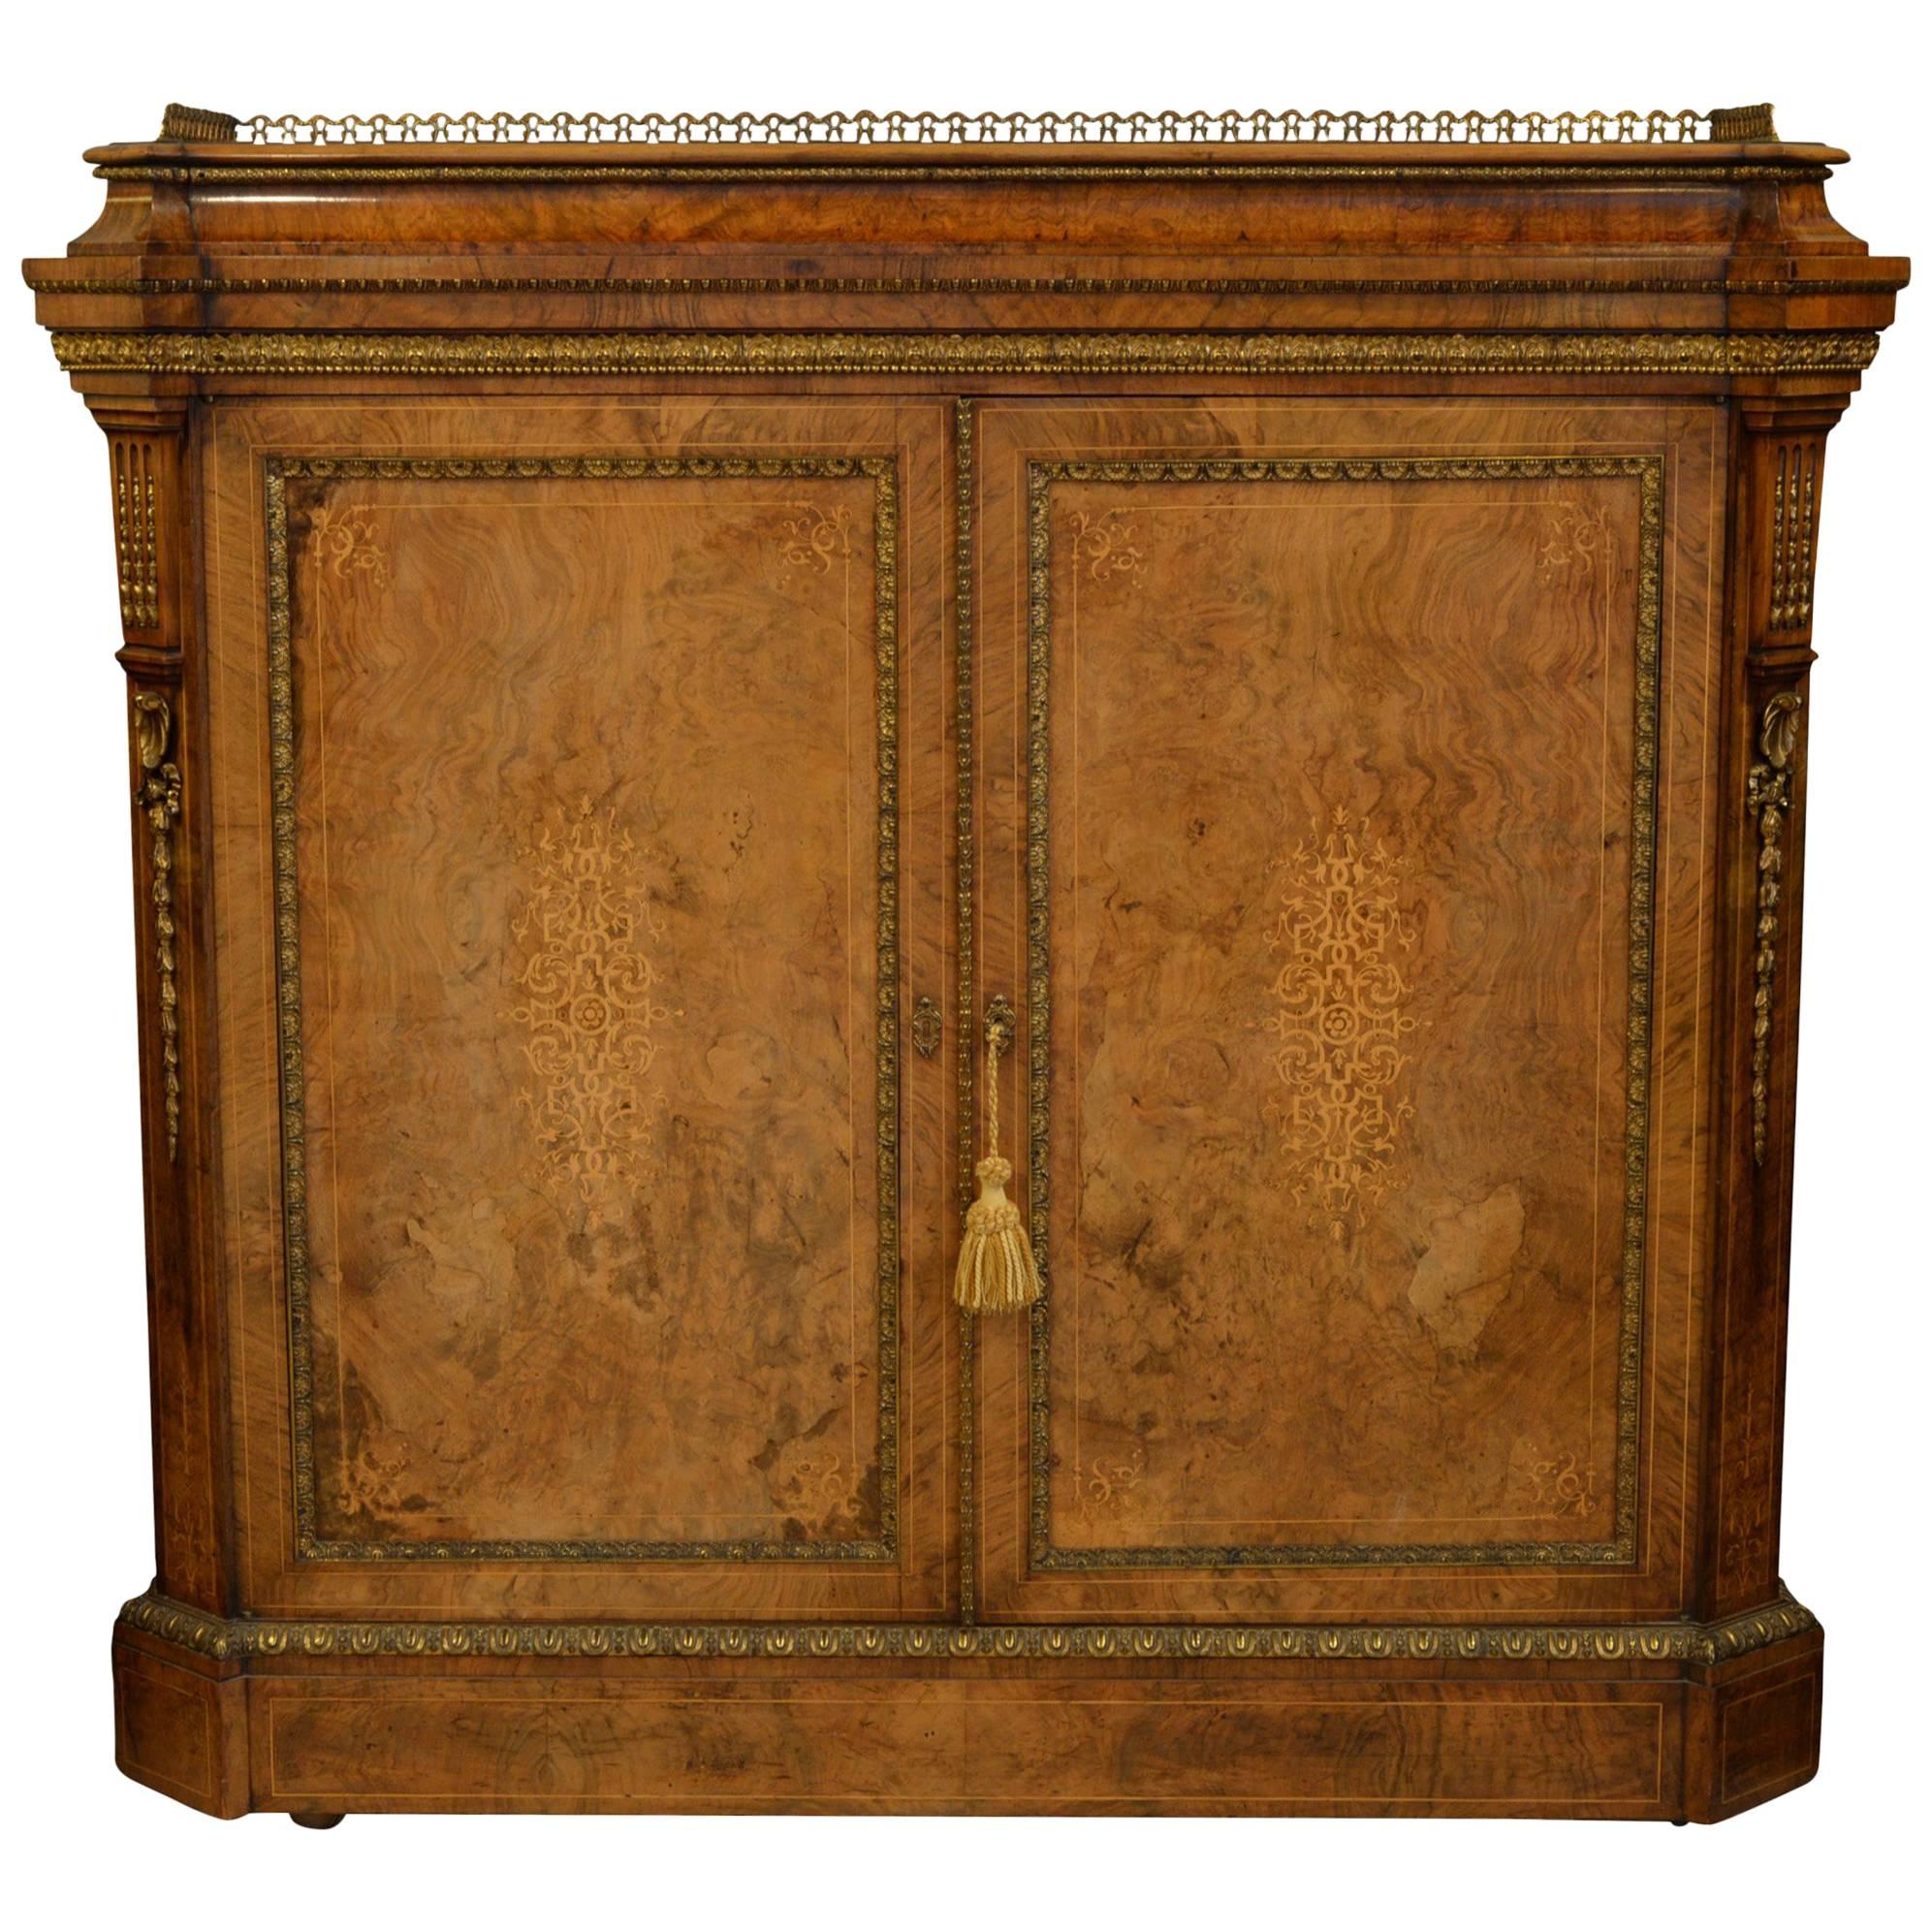 Quality Victorian Burr Walnut Cabinet